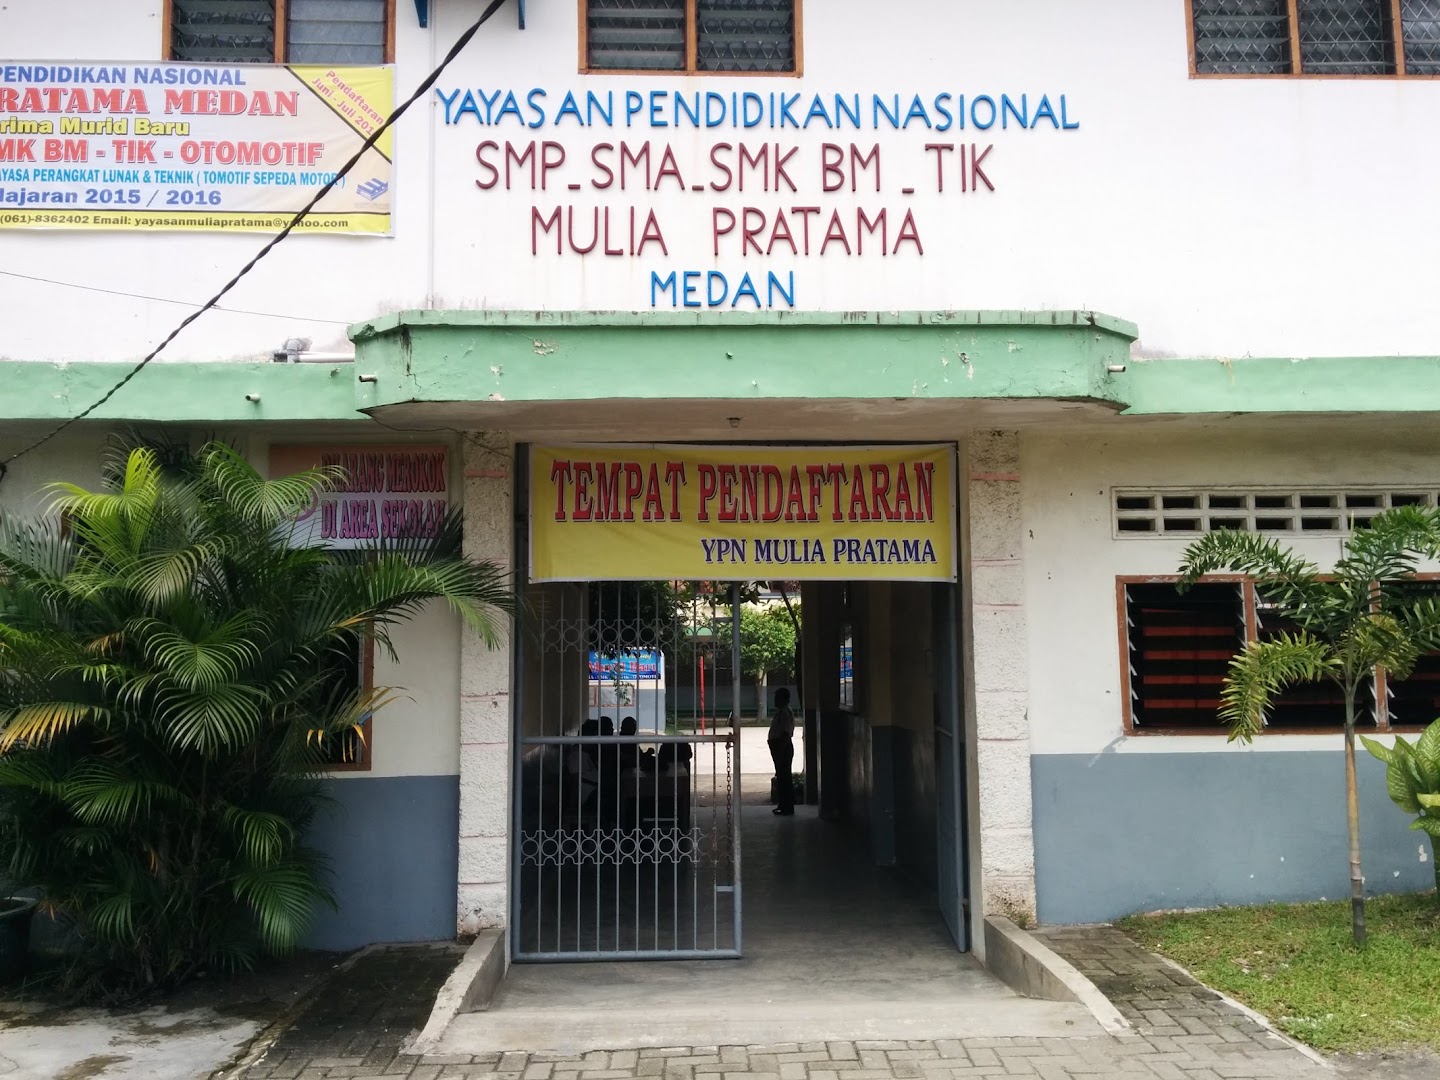 Yayasan Pendidikan Nasional Mulia Pratama Photo